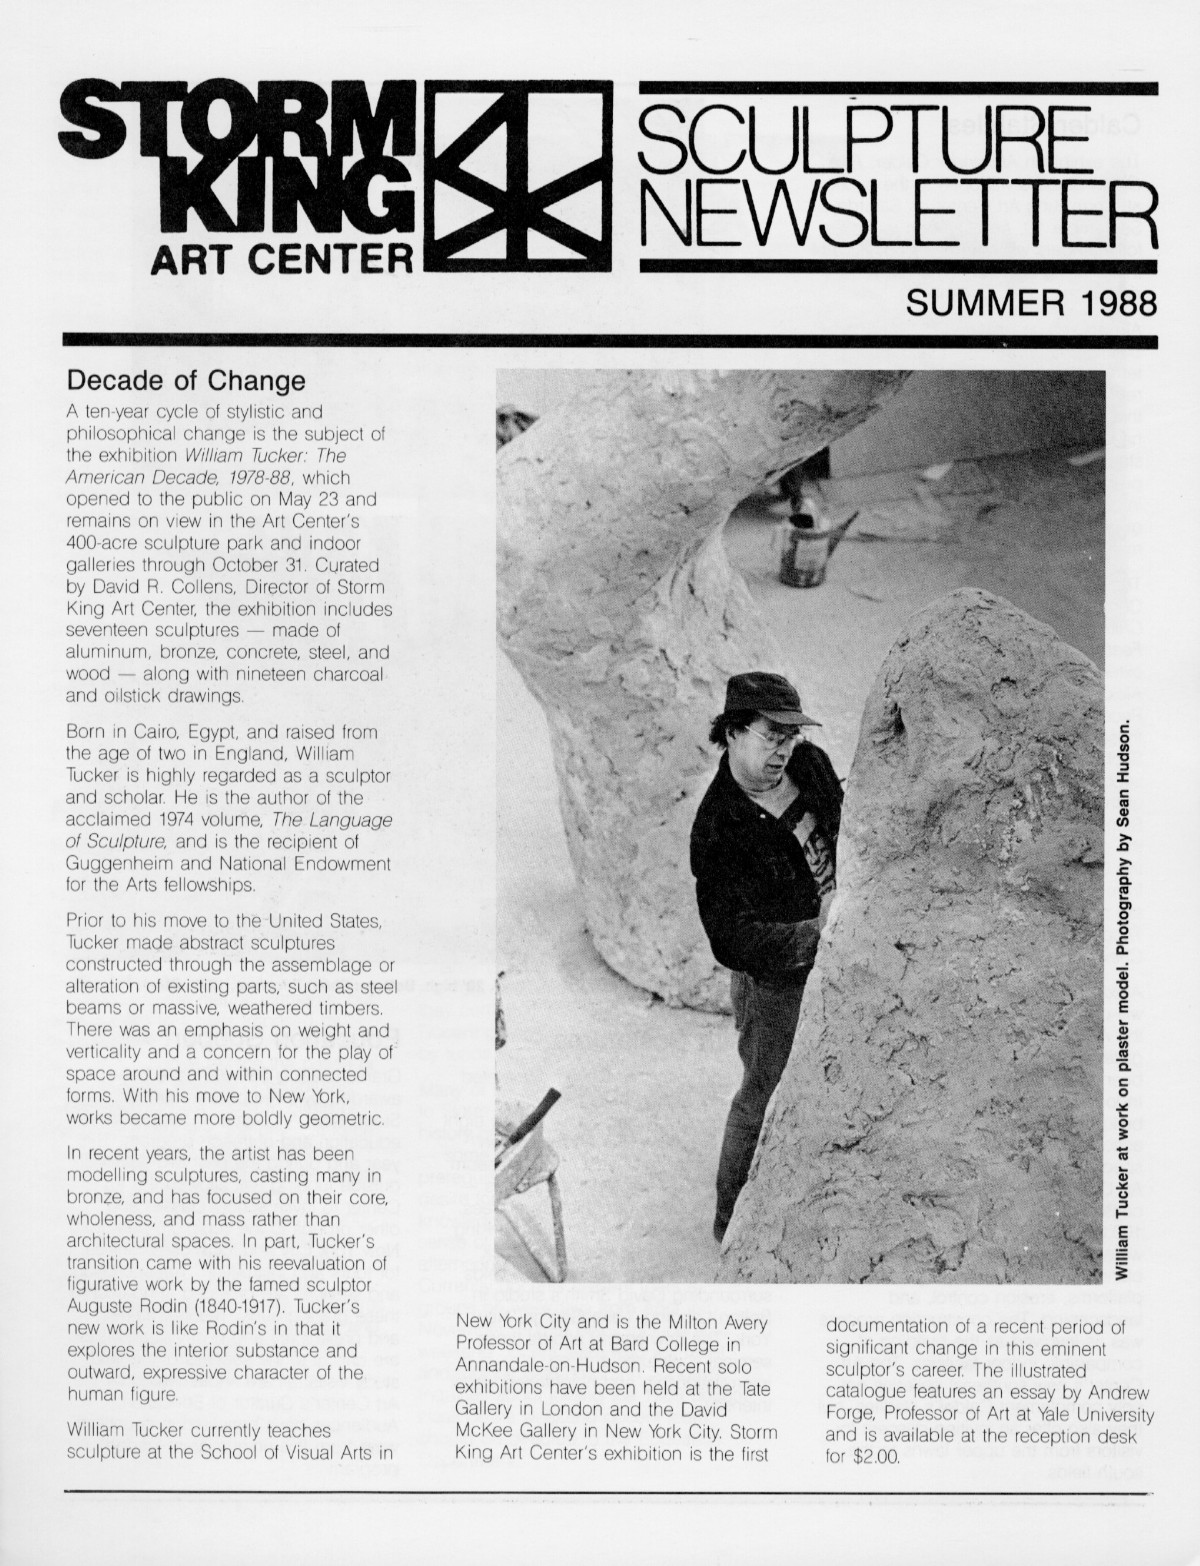 Storm King Art Center Newsletter, Summer 1988